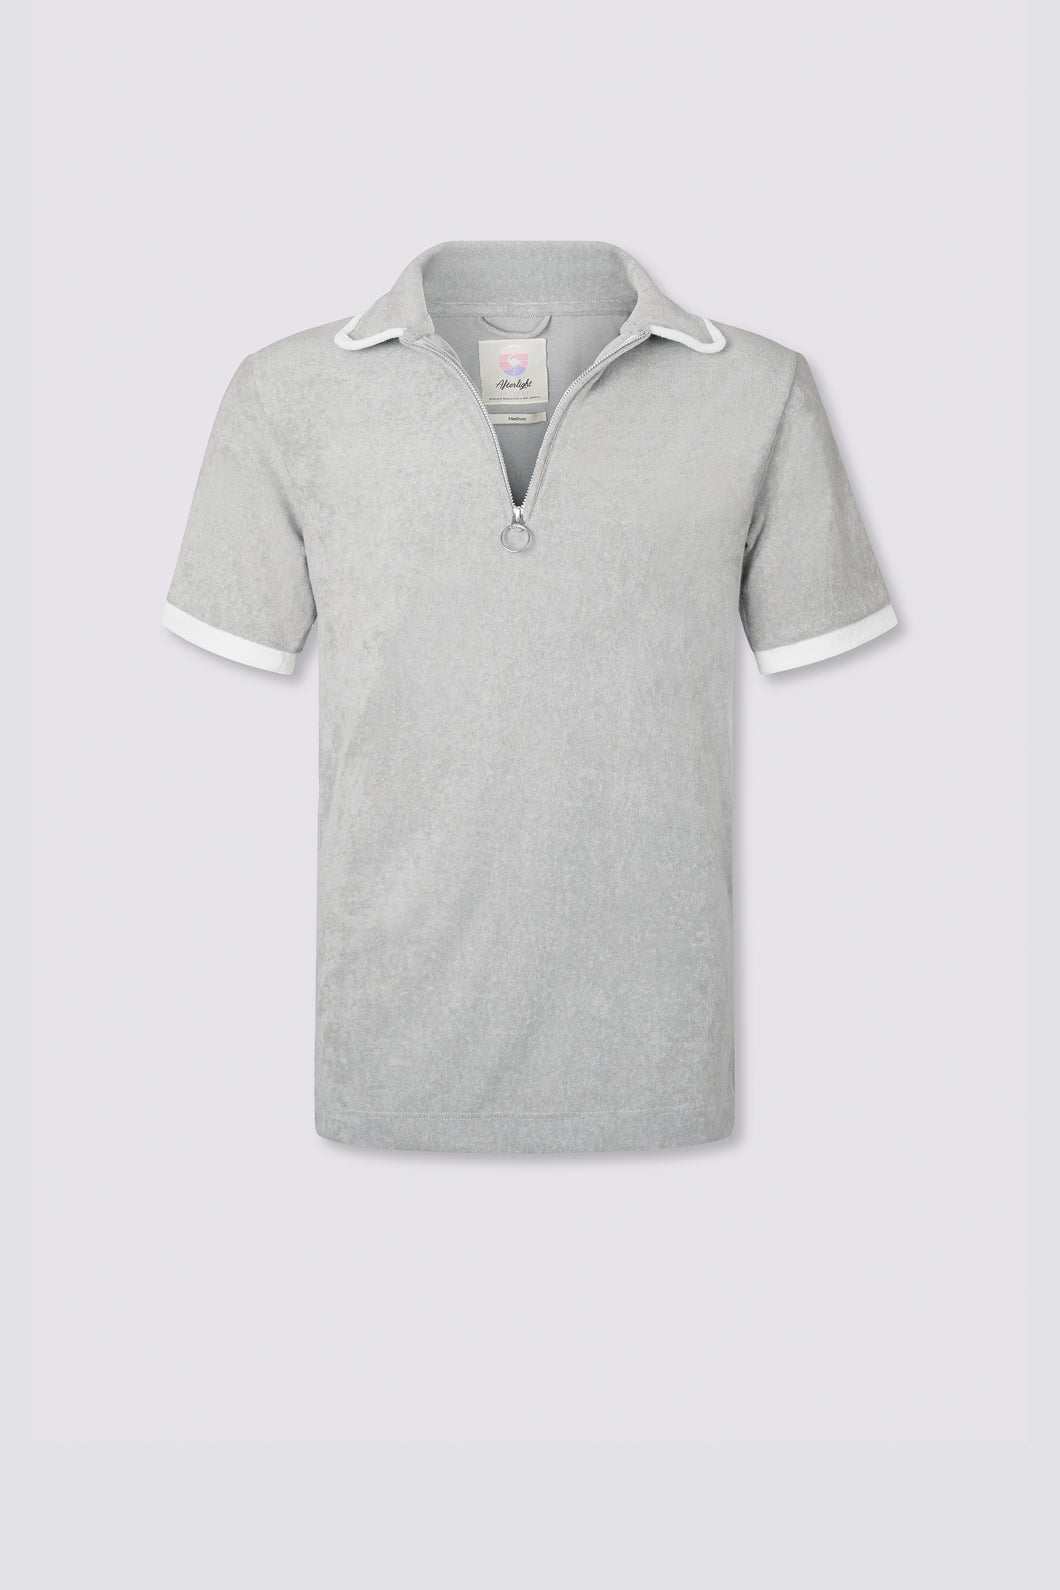 Terry Cloth Polo - Gstaad Grey